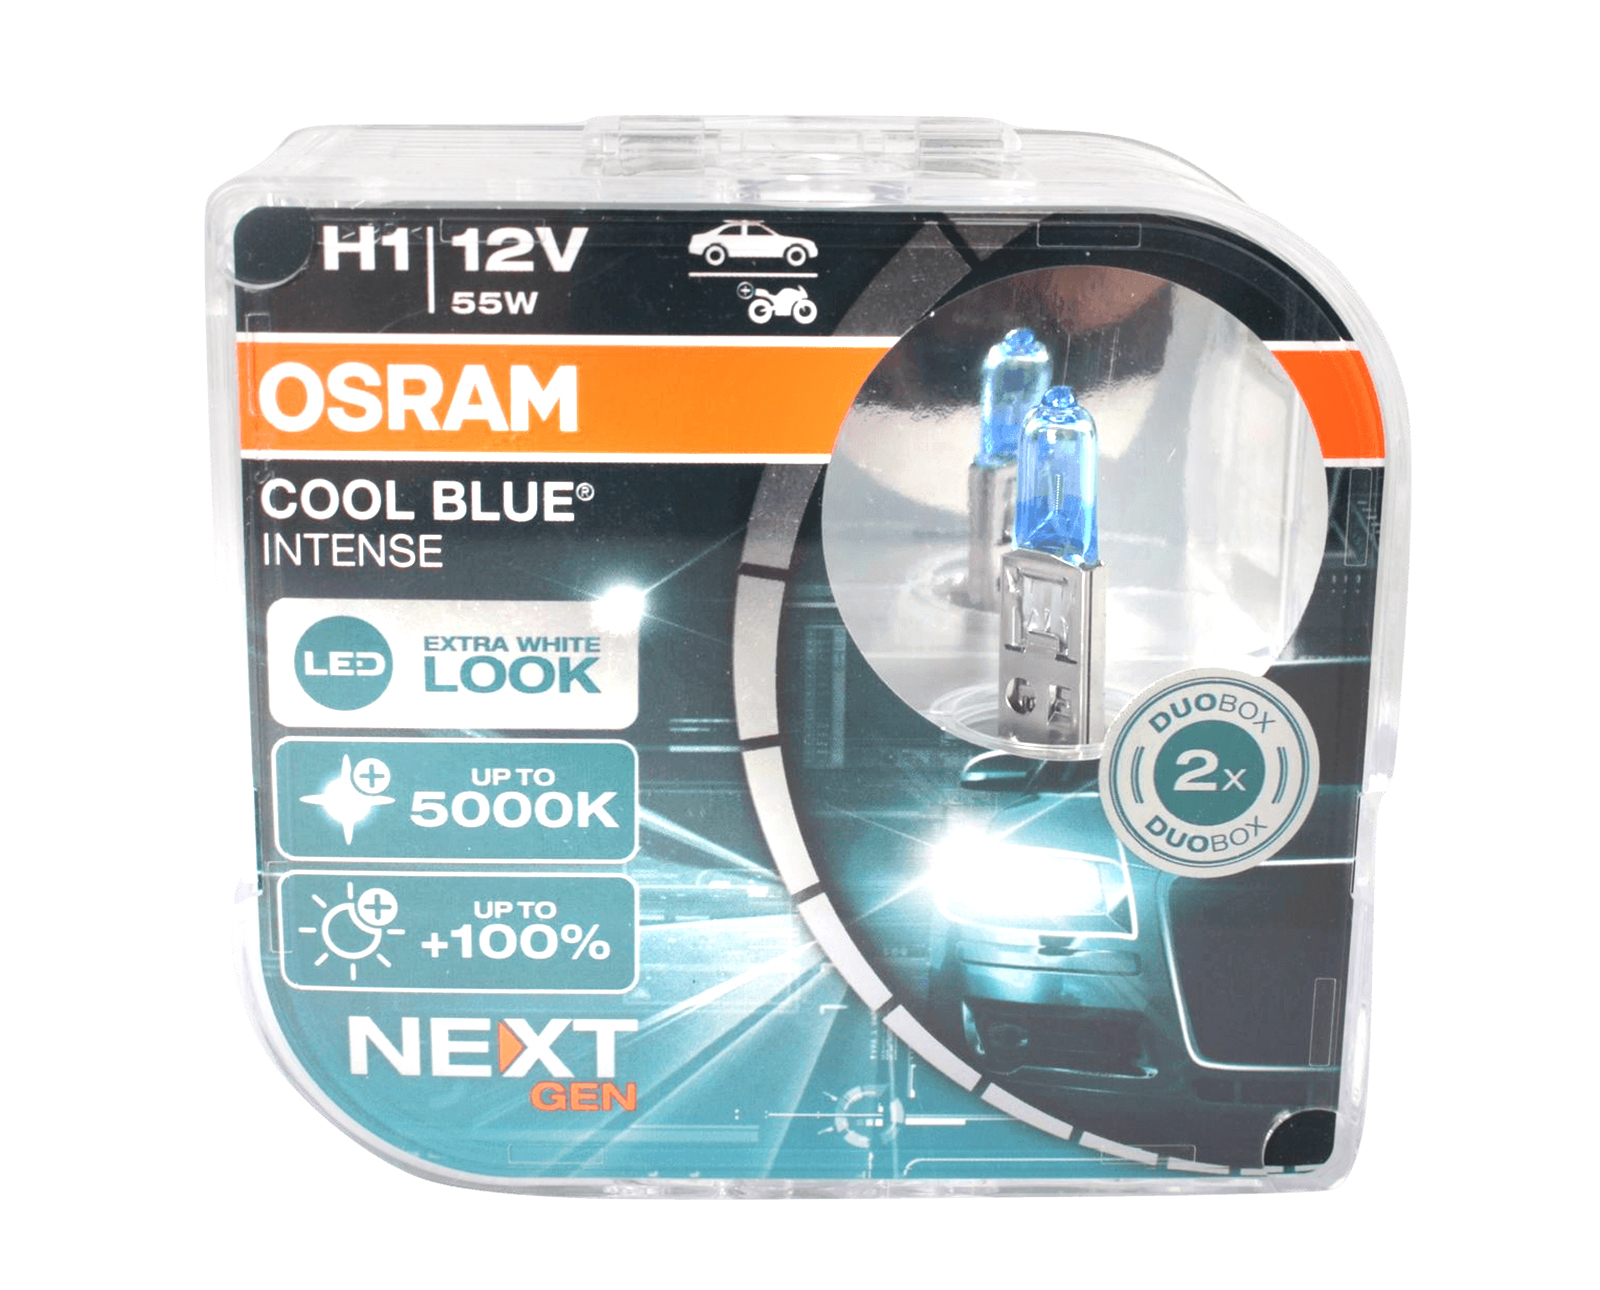 Набор ламп 12Vx55W H1 OSRAM COOL BLUE INTENSE (NextGen) 2 шт комплект O-64150 CBN2 EURO фотография №1